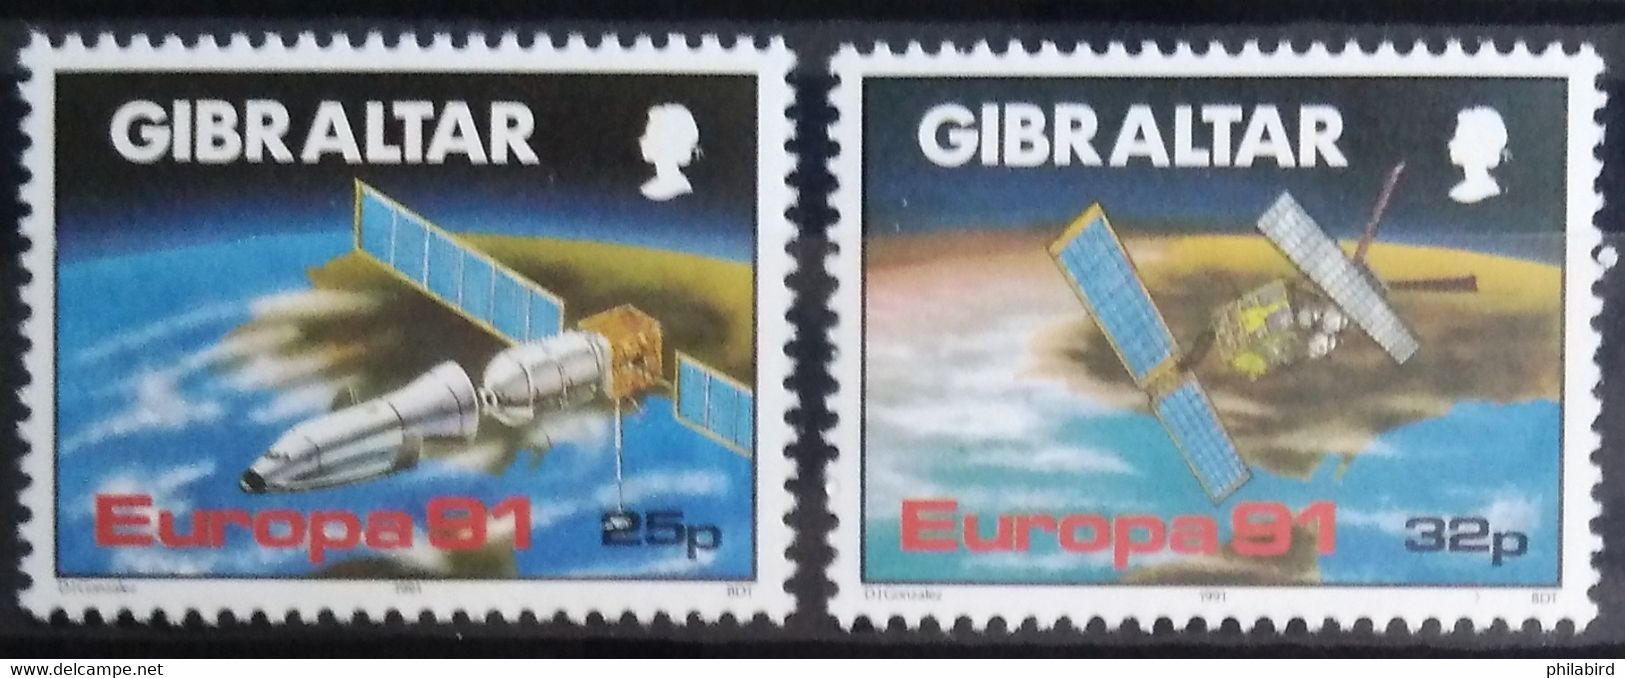 EUROPA 1991 - GIBRALTAR                   N° 622/623                       NEUF** - 1991